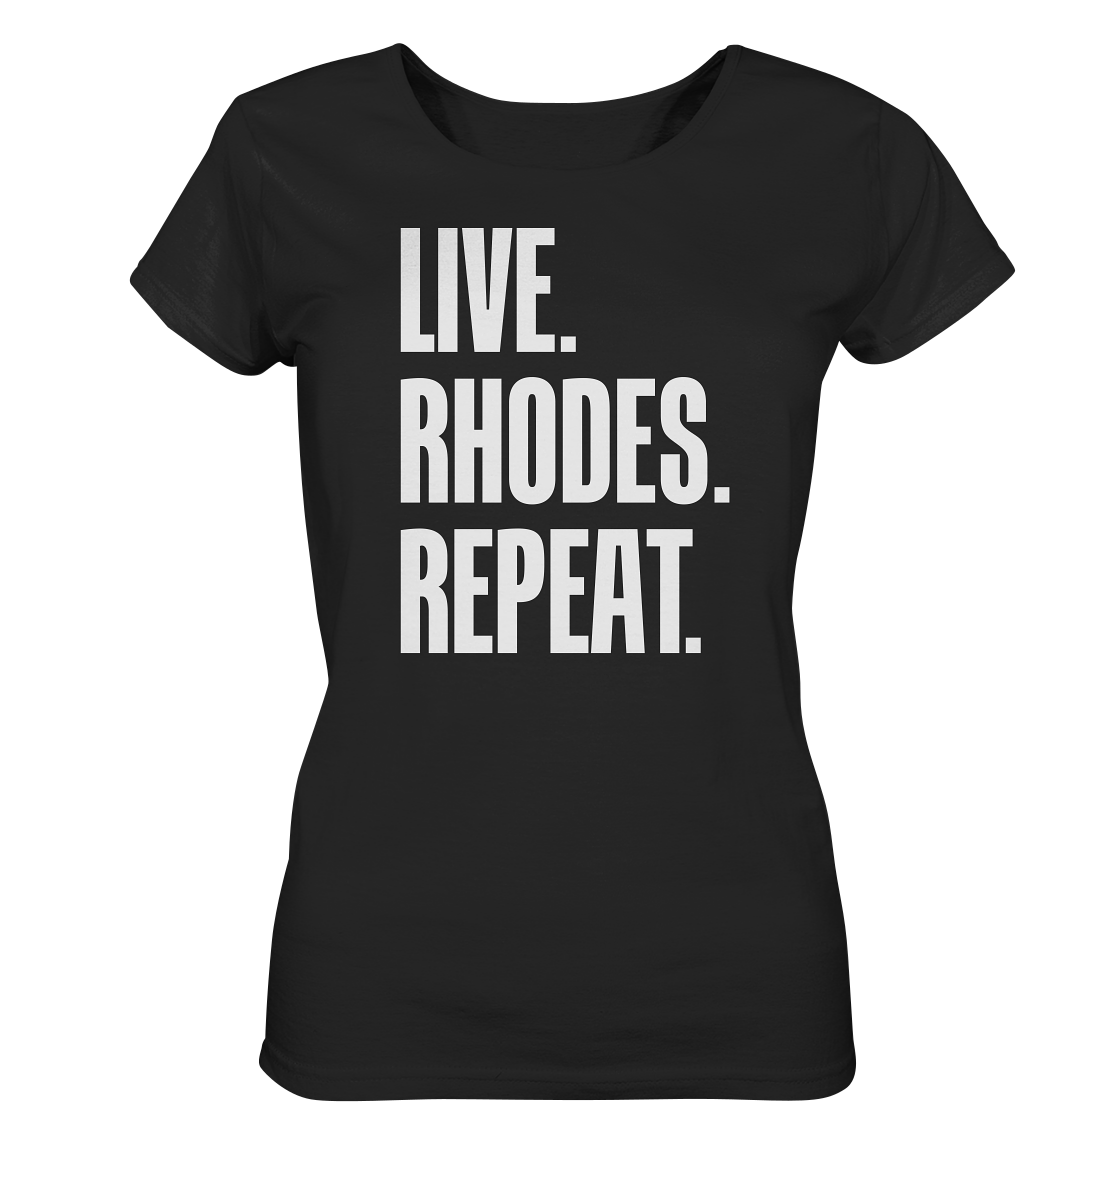 LIVE. RHODES. REPEAT. - Ladies organic shirt